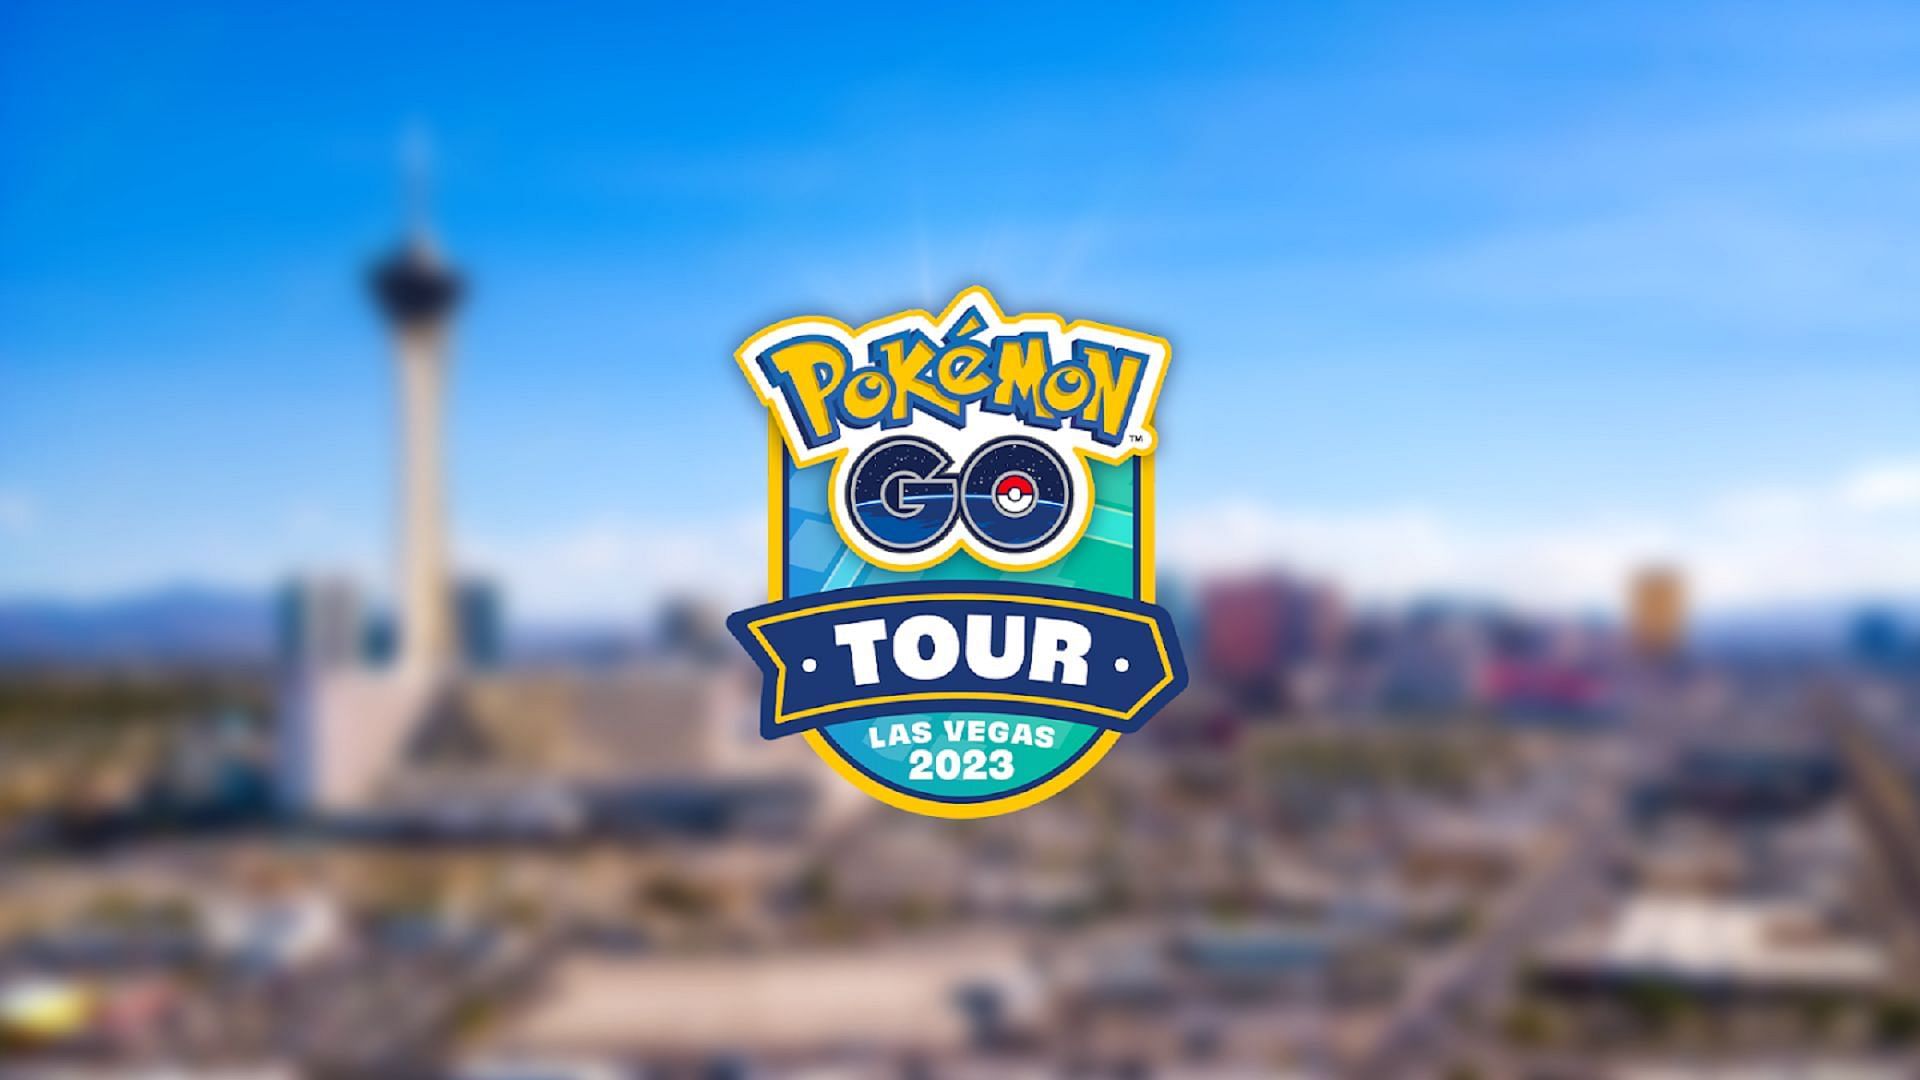 Prepare to catch'em all at Pokémon GO's enormous event in Las Vegas